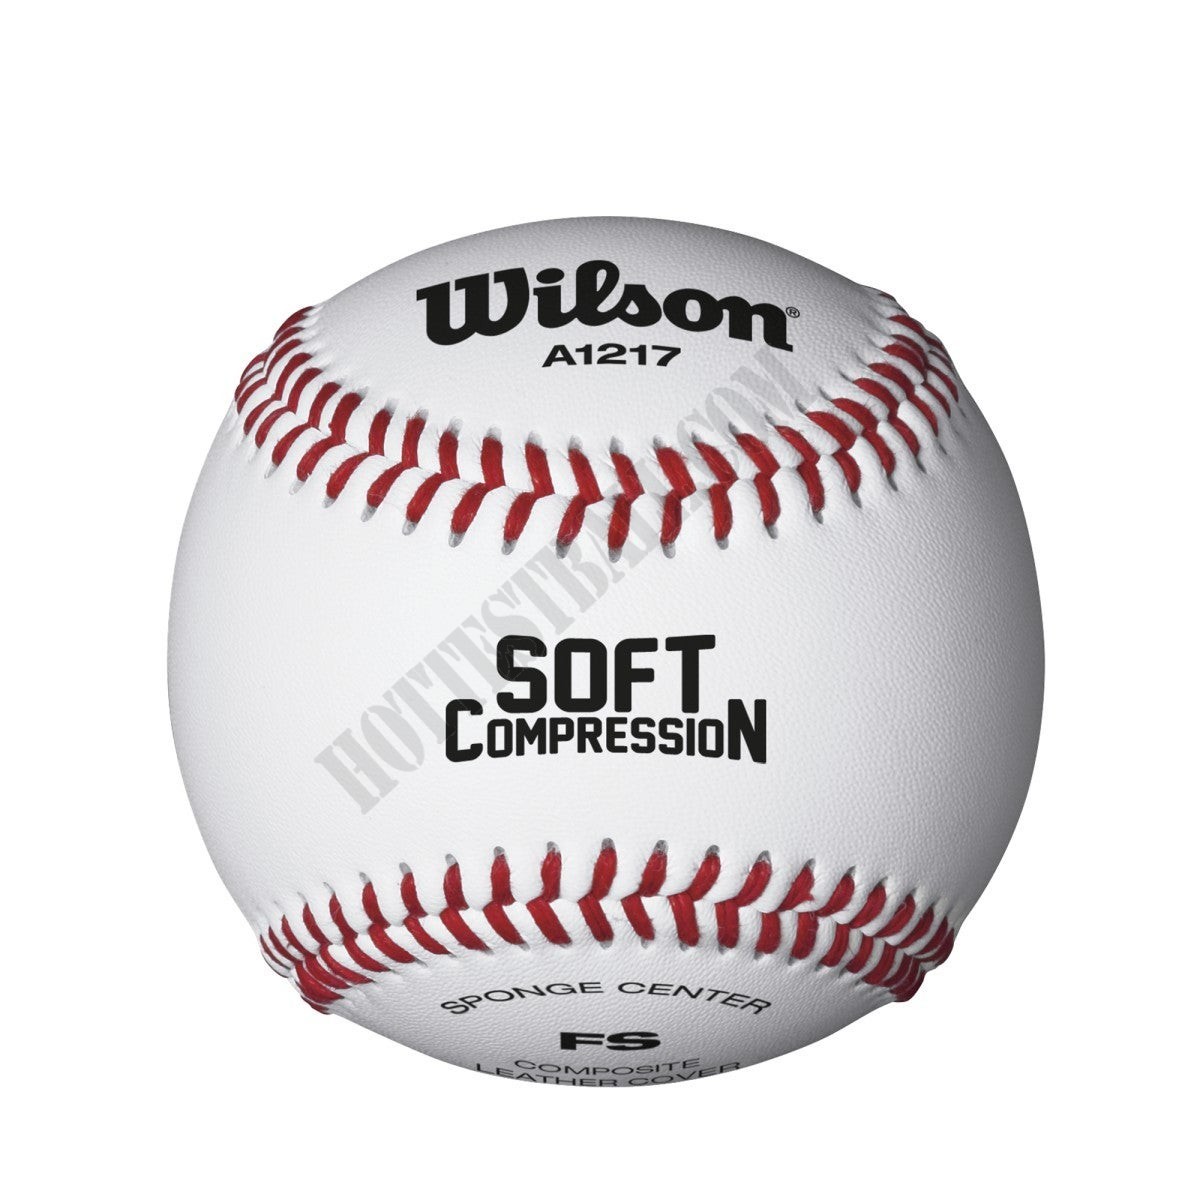 A1217 Soft Compression Baseballs - Wilson Discount Store - -0